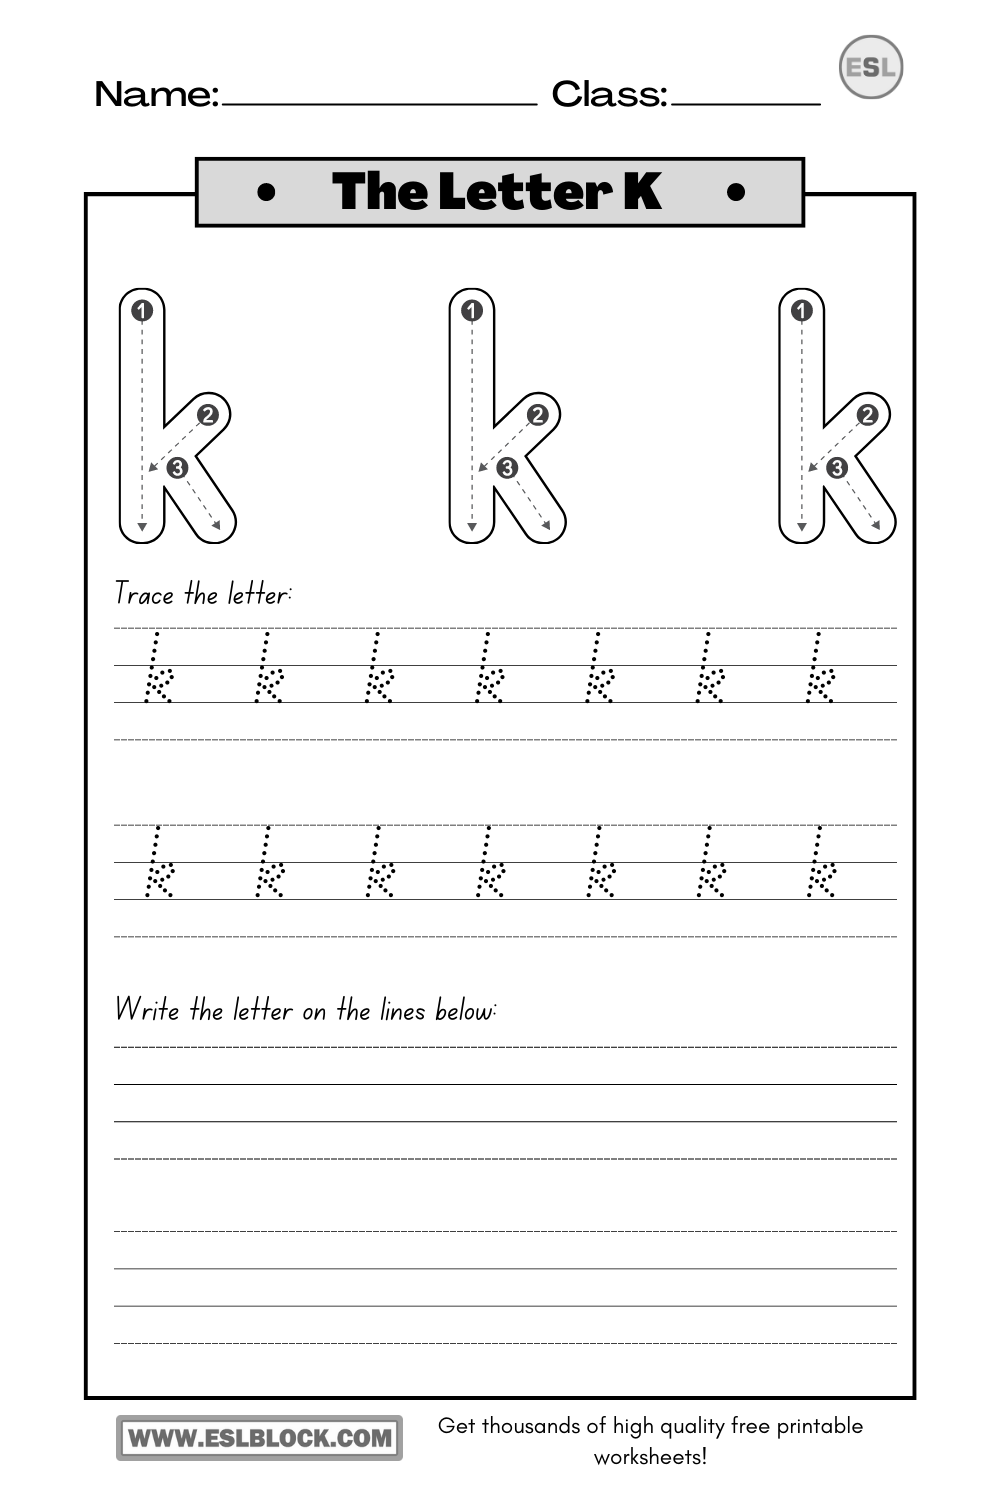 Alphabet K Printable Worksheets, Free Worksheets, Kindergarten Worksheets, Letter K Printable Worksheets, Preschool Worksheets, Tracing the Letter K, Tracing the letter K Printable, Tracing the Letter K Worksheets, Tracing Worksheets, Worksheets